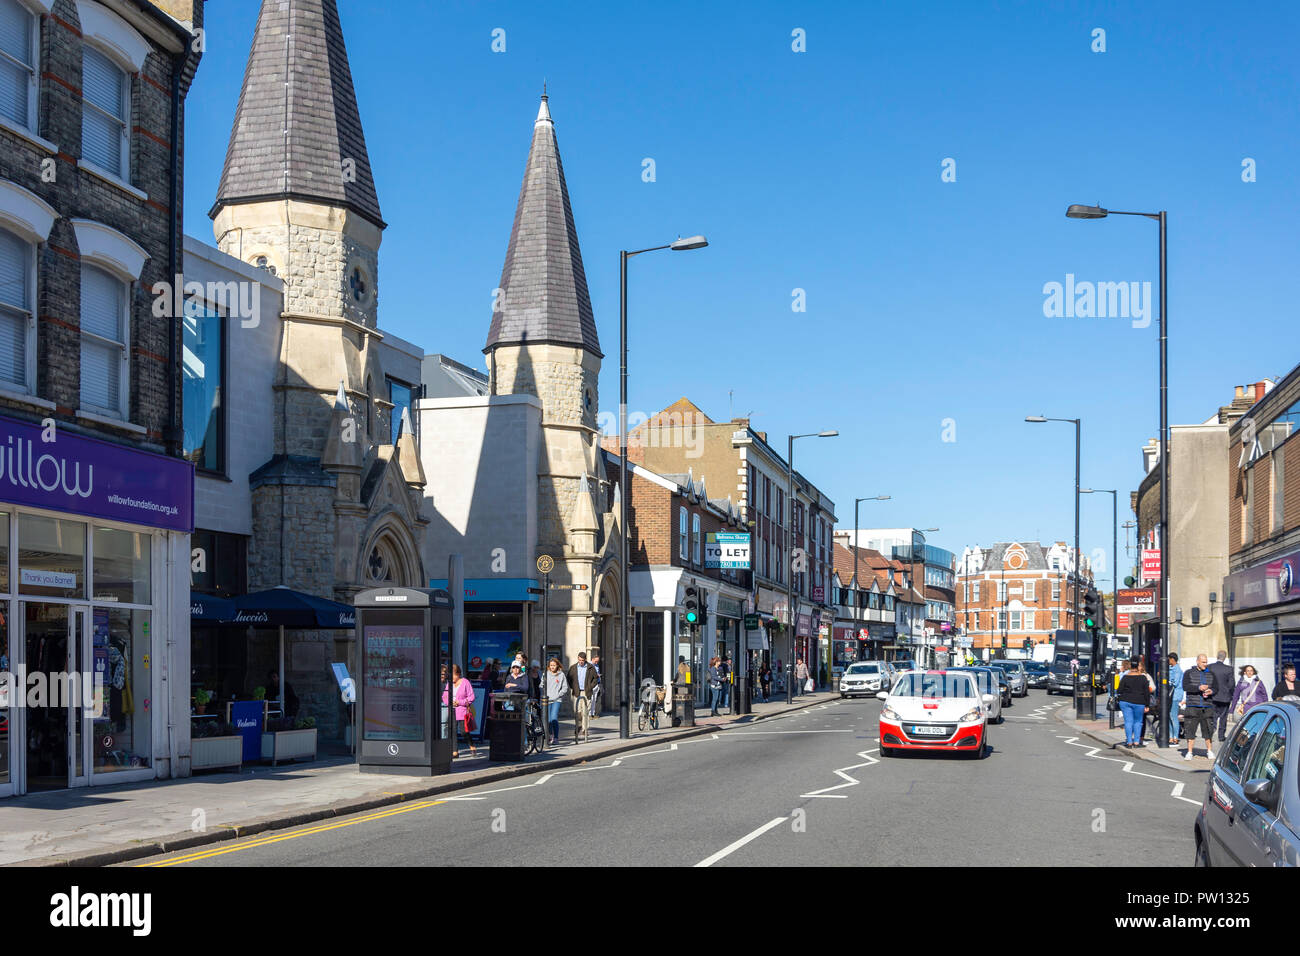 The Spires shopping centre, High Street, Barnet, London Borough of Barnet, Greater London, England, United Kingdom Stock Photo